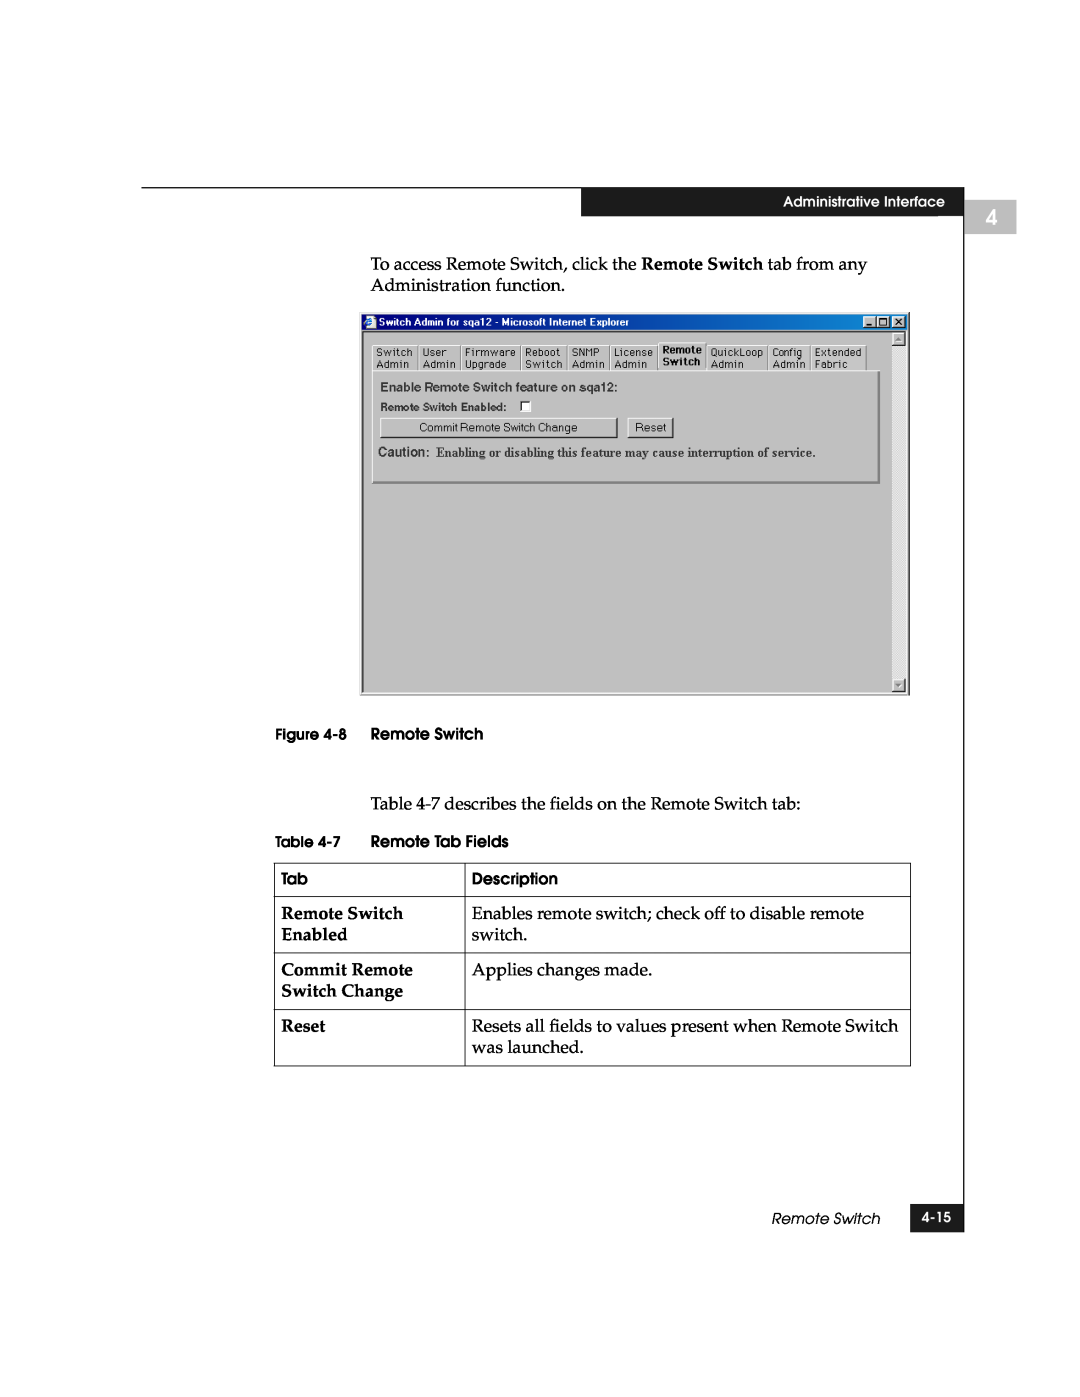 EMC DS-8B manual 8 Remote Switch, 7 Remote Tab Fields 